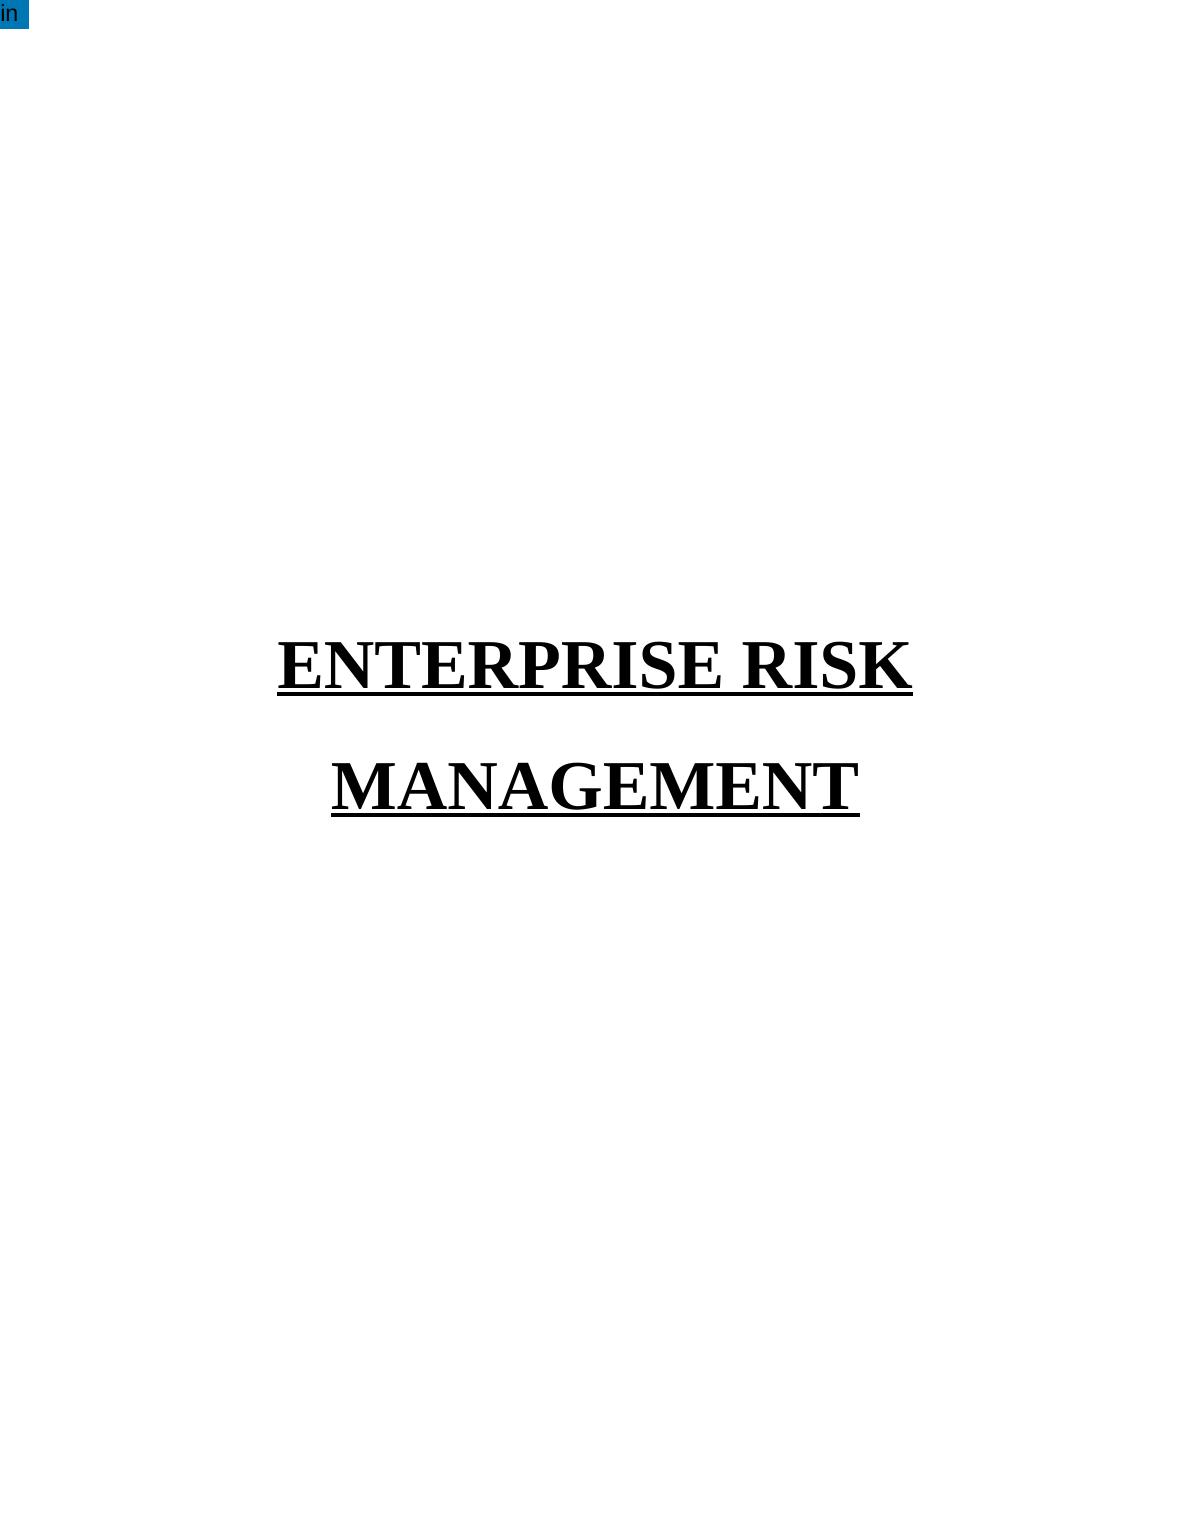 Risk Management Report - Tesco Plc_1